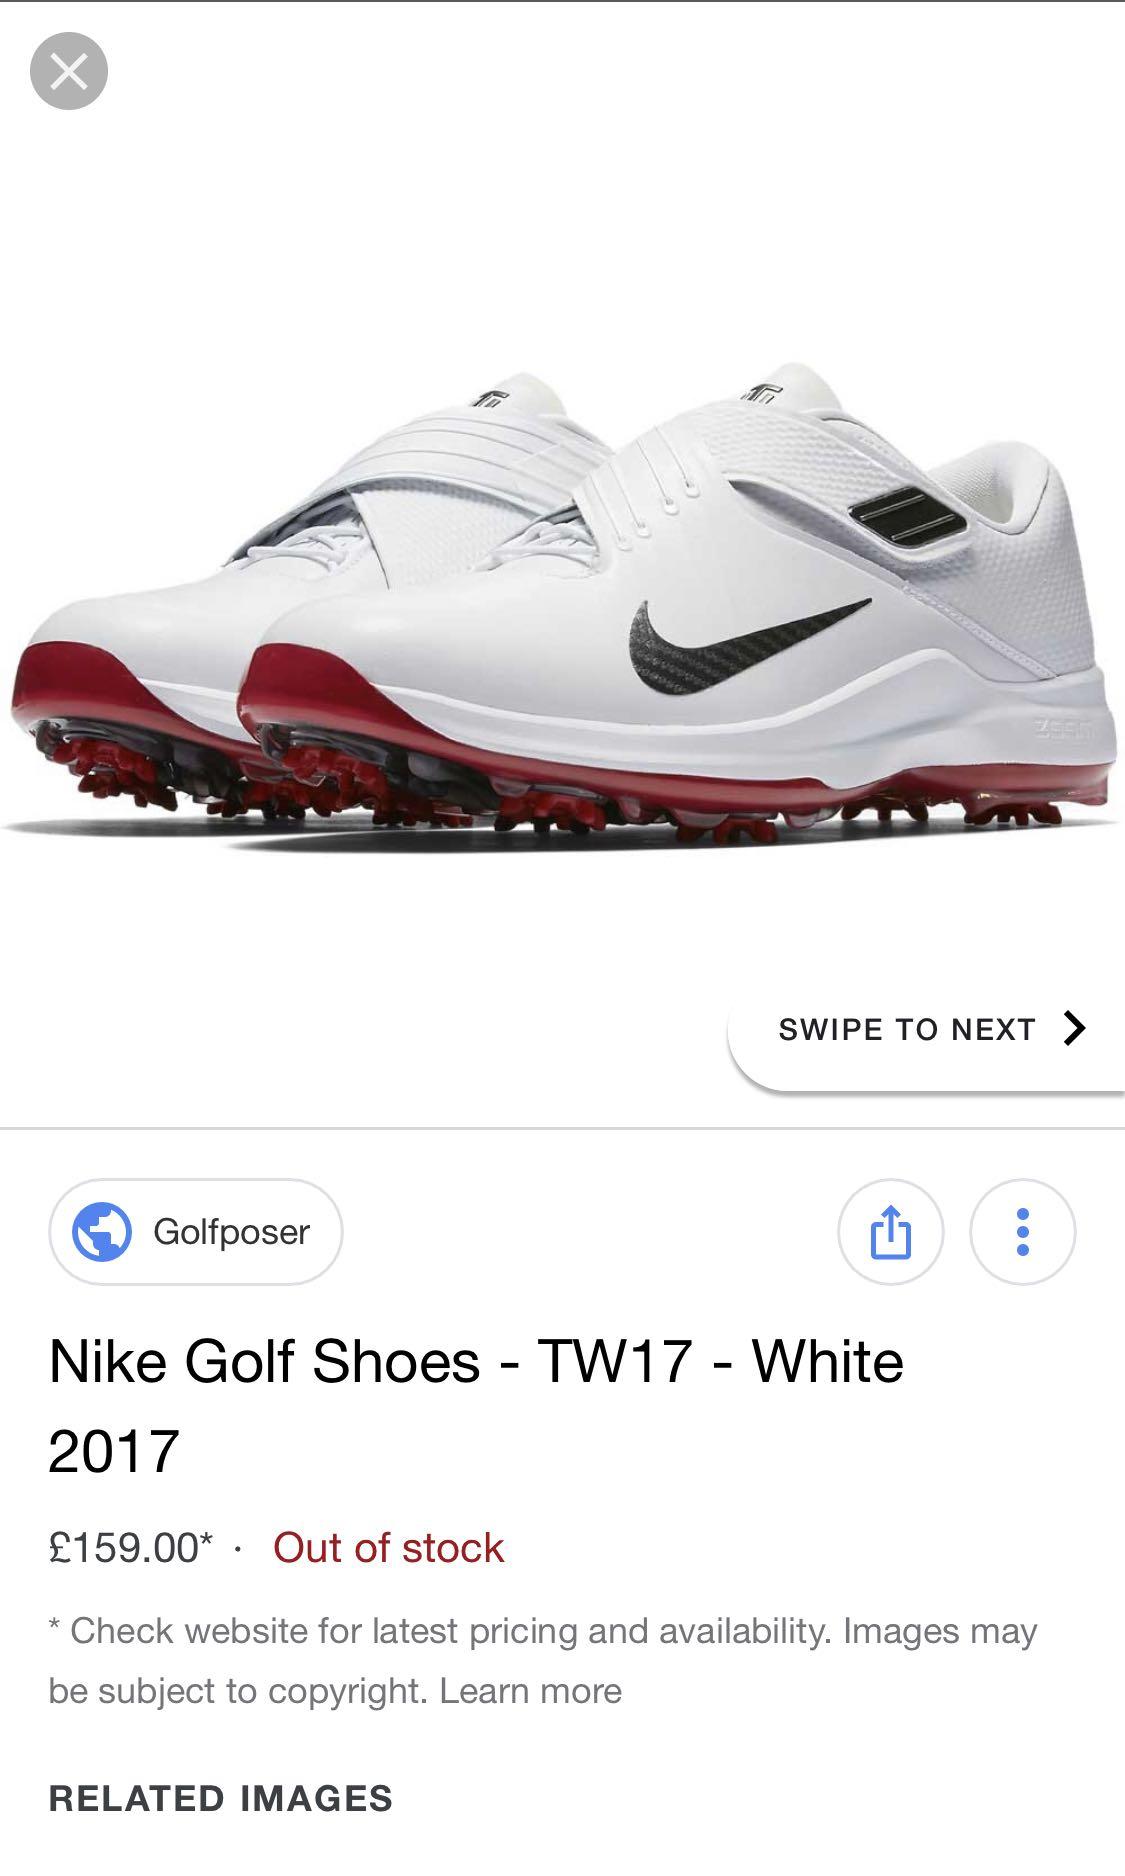 tw17 golf shoes